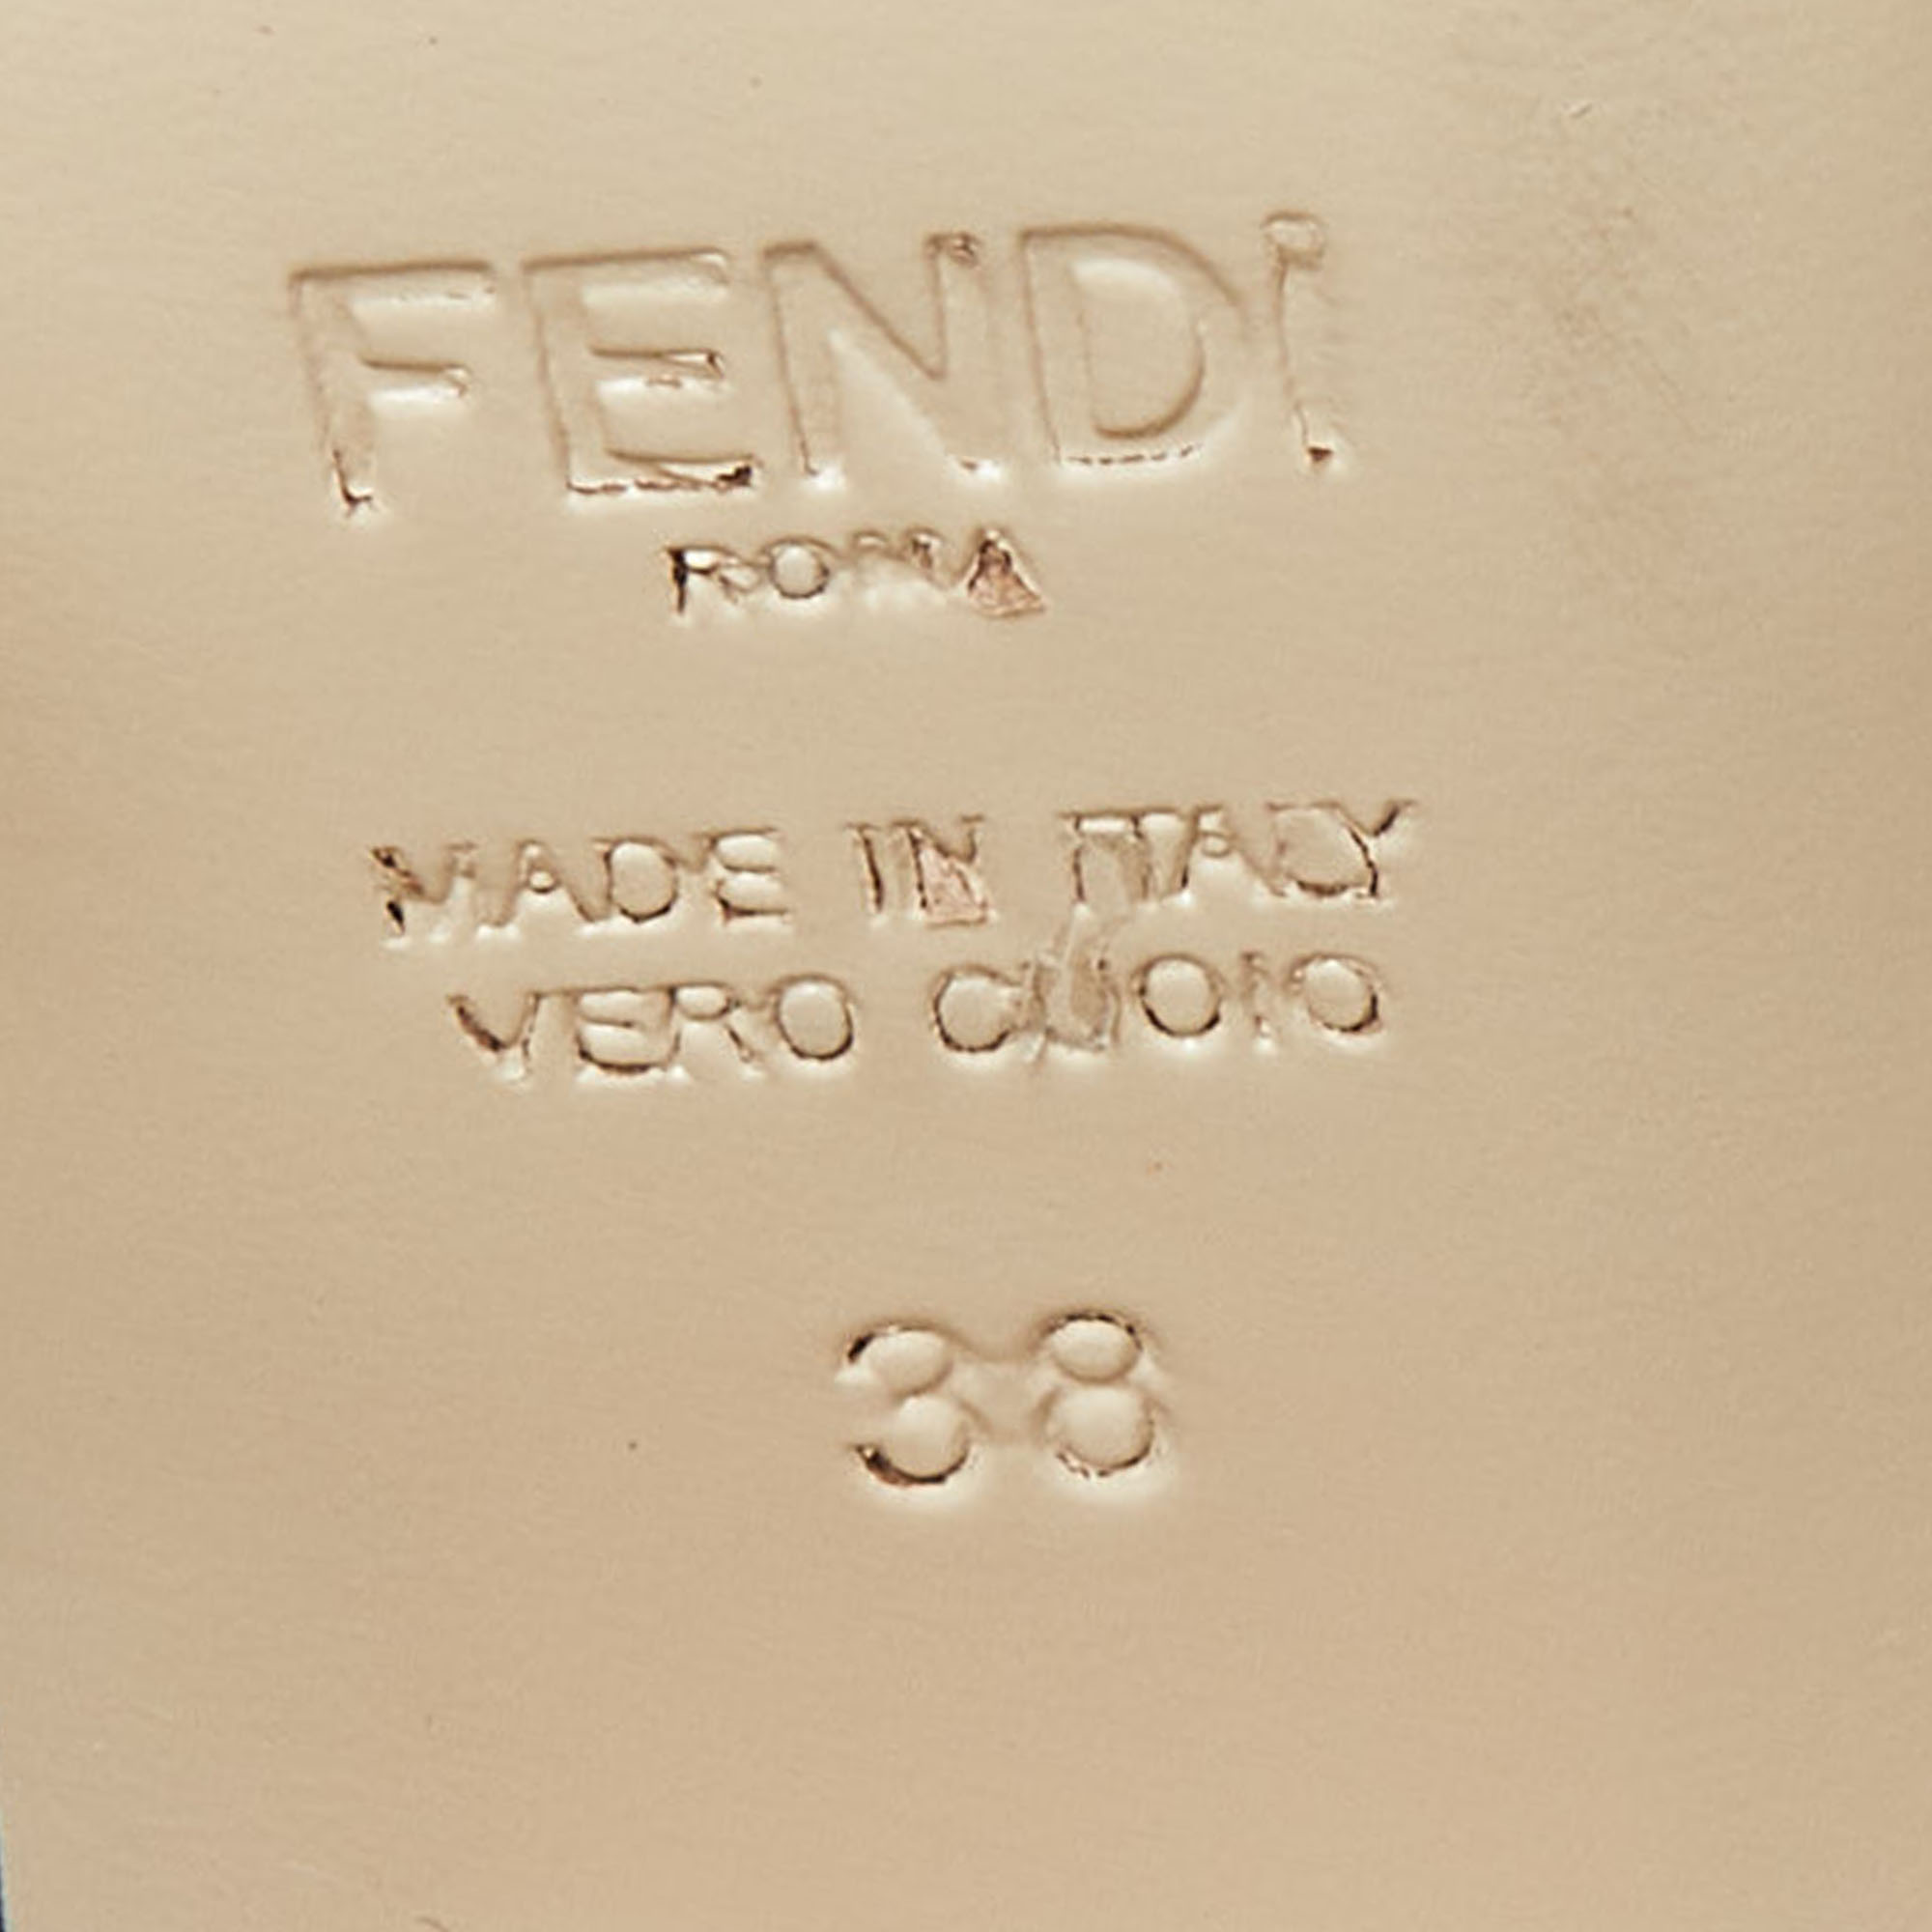 Fendi Black Leather Open Toe Mules Size 38